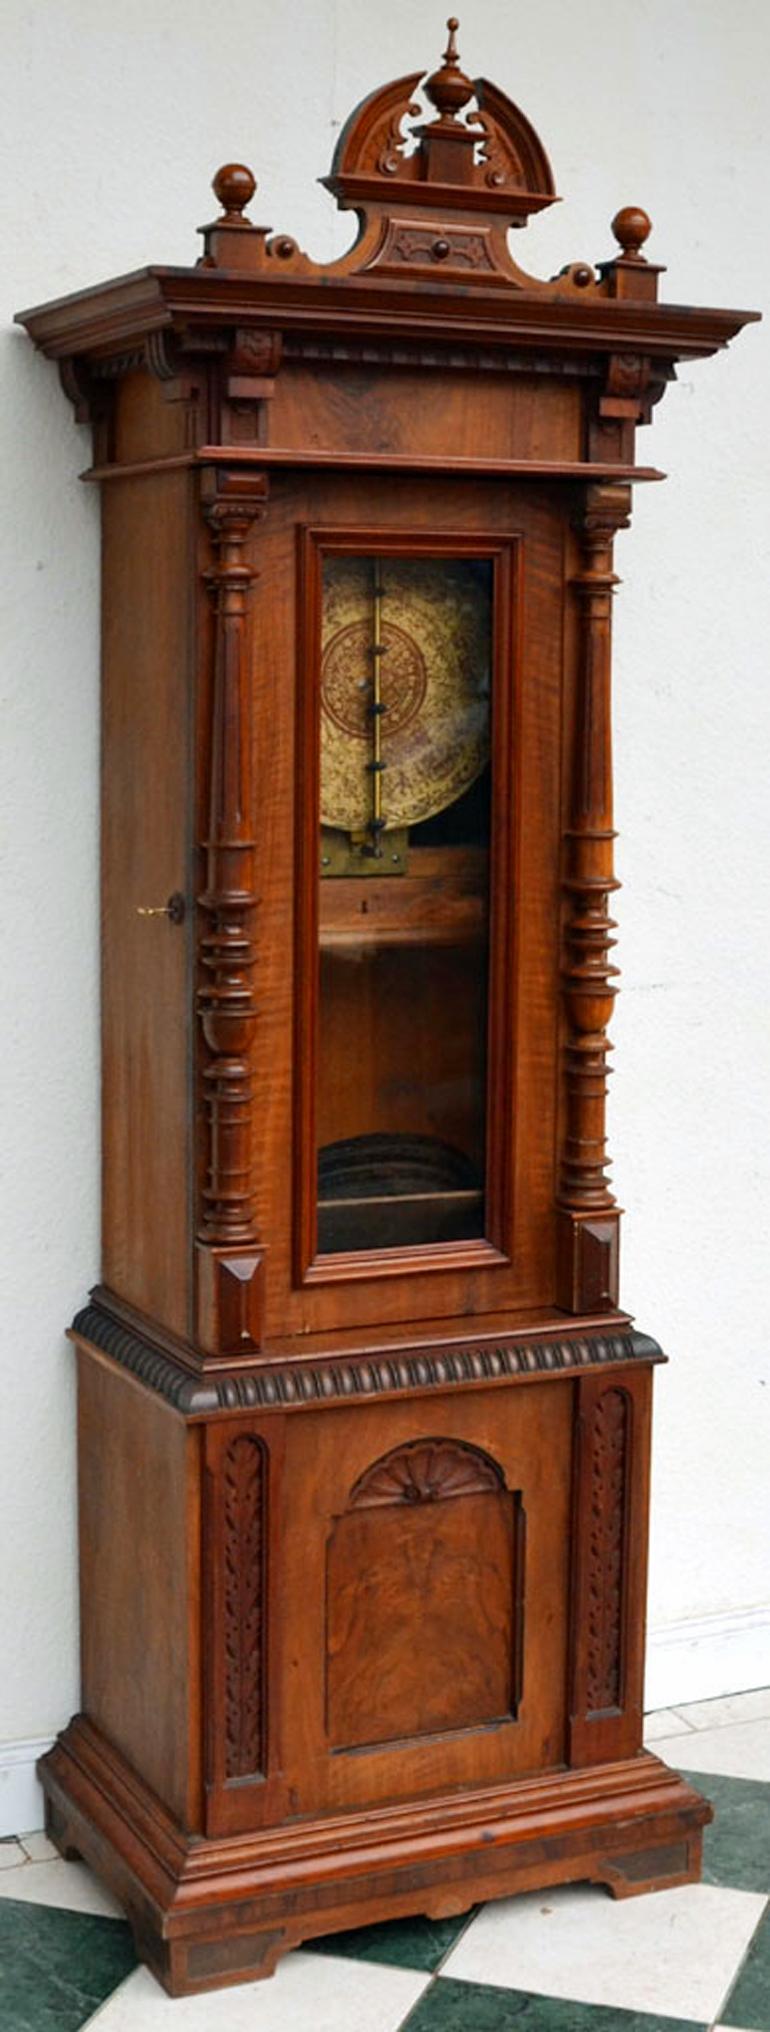 Neoclassical German-Made Symphonion Musical Clock, circa 1900